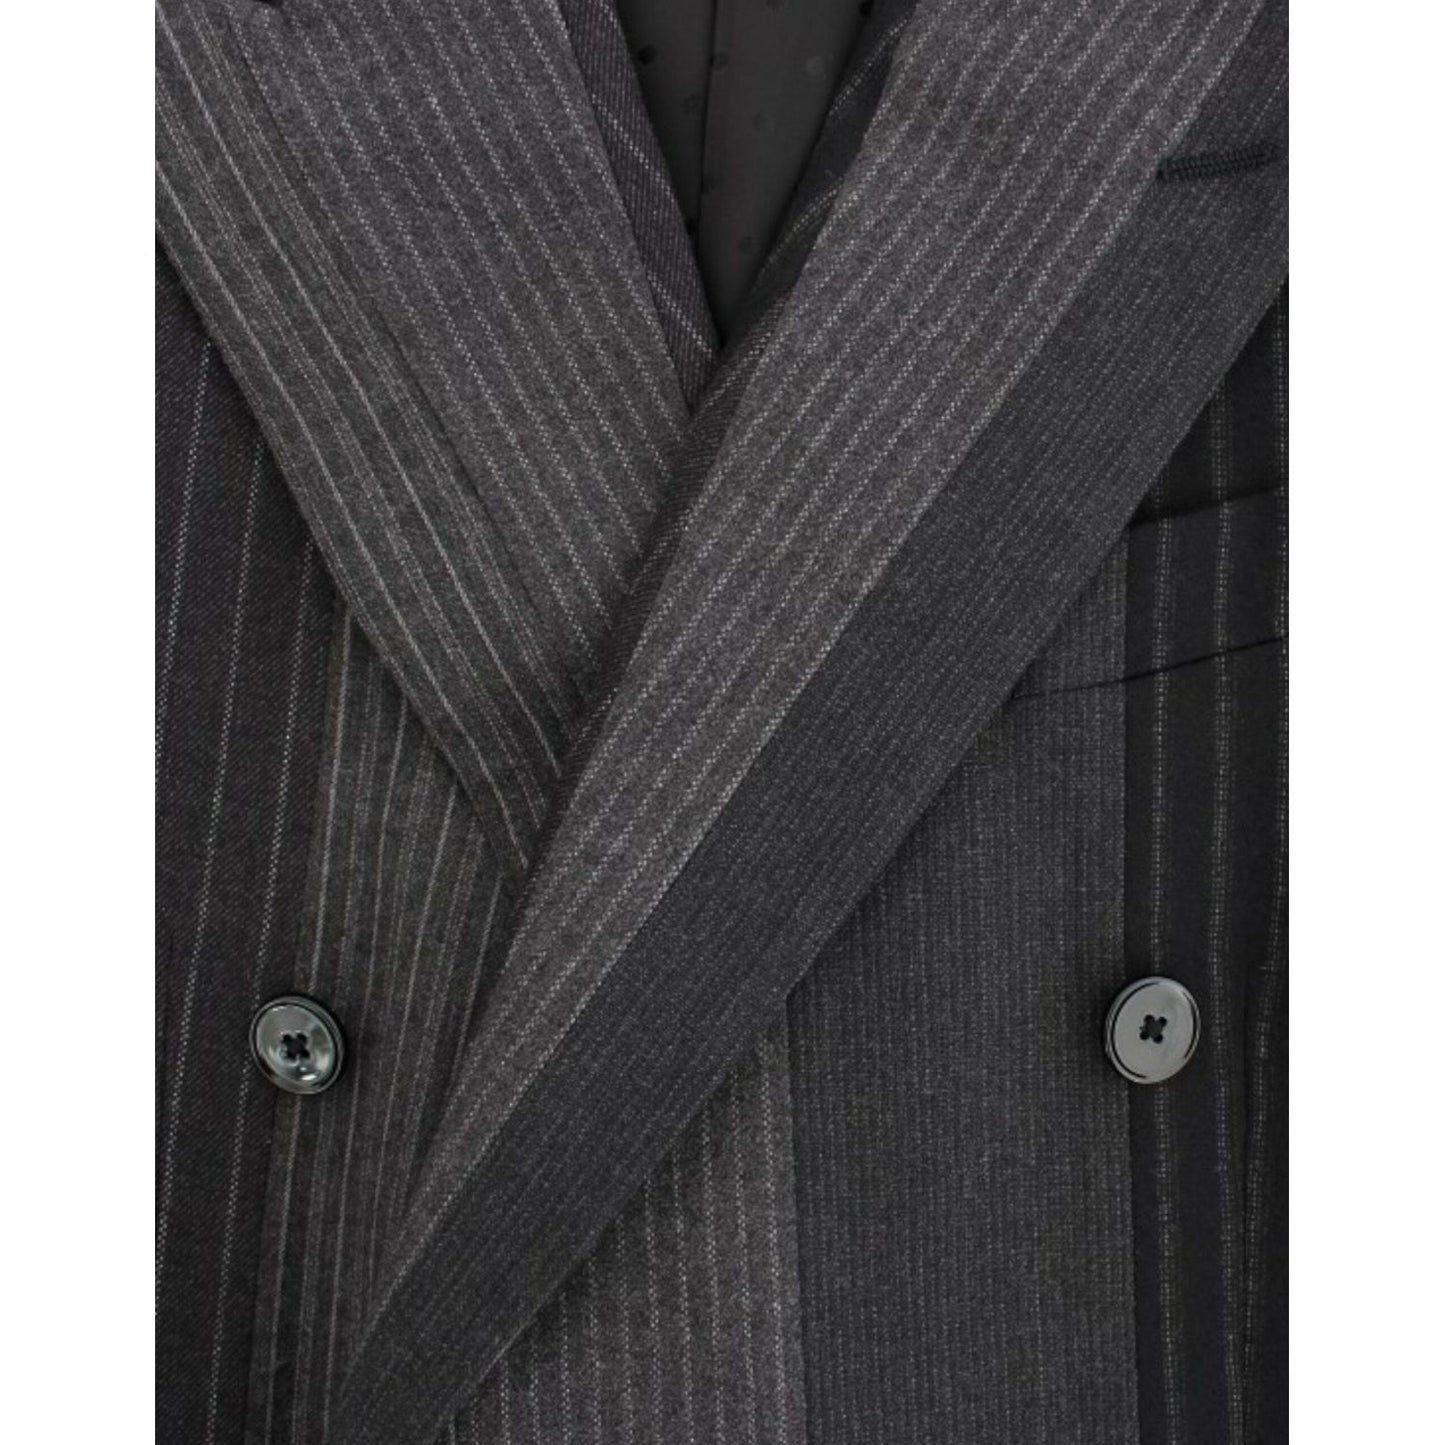 Dolce & Gabbana Elegant Gray Striped Wool Slim Blazer gray-striped-wool-stretch-blazer 13161-gray-striped-wool-stretch-blazer-4-8-scaled-50a487ca-5f0.jpg